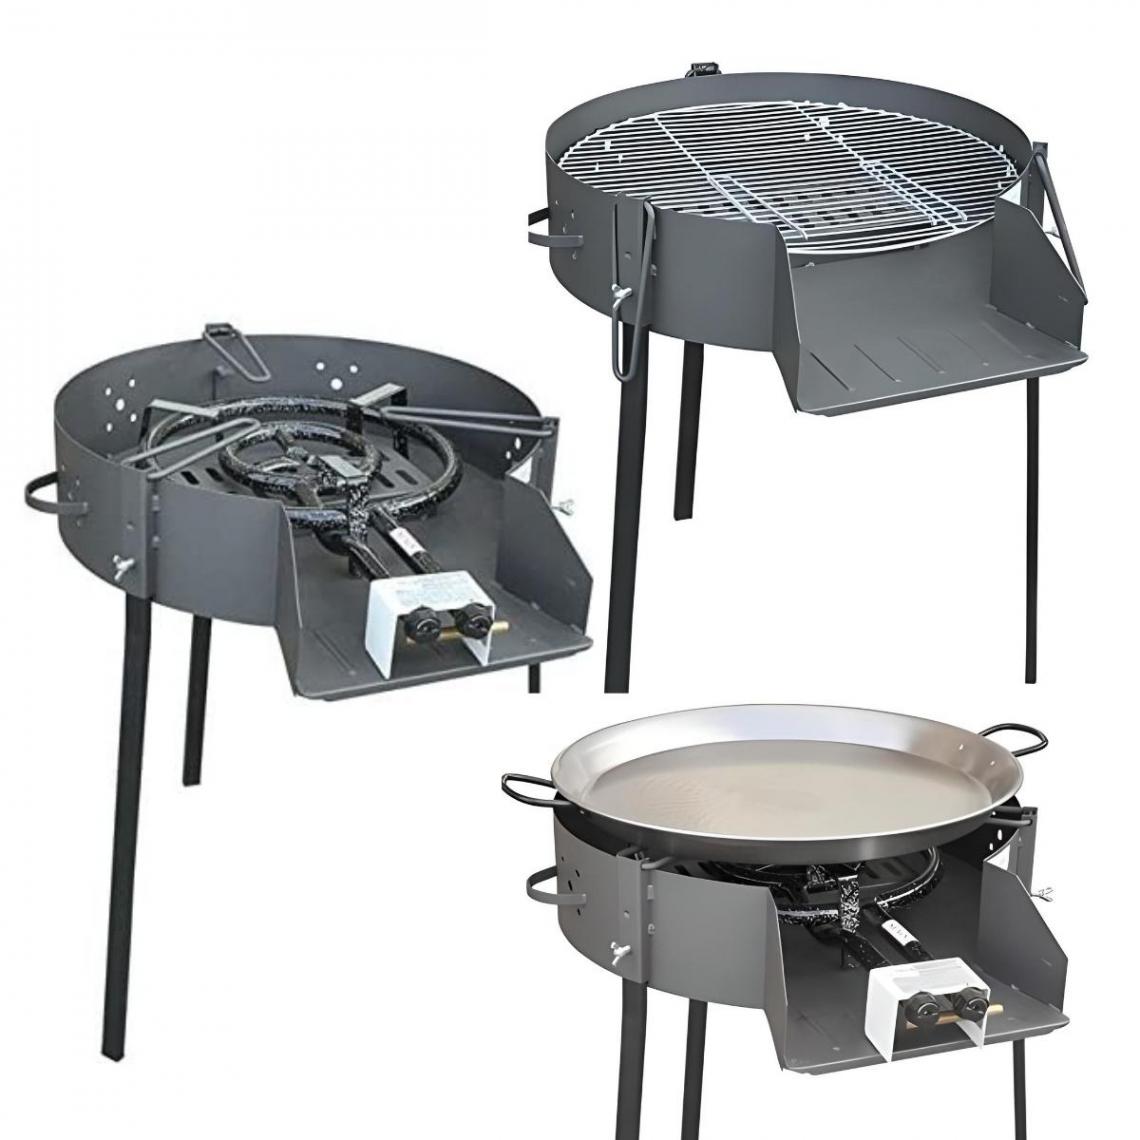 Visiodirect - Barbecue rond avec support en Acier inoxydable coloris noir - 50 x 81 x 93 cm - Barbecues gaz